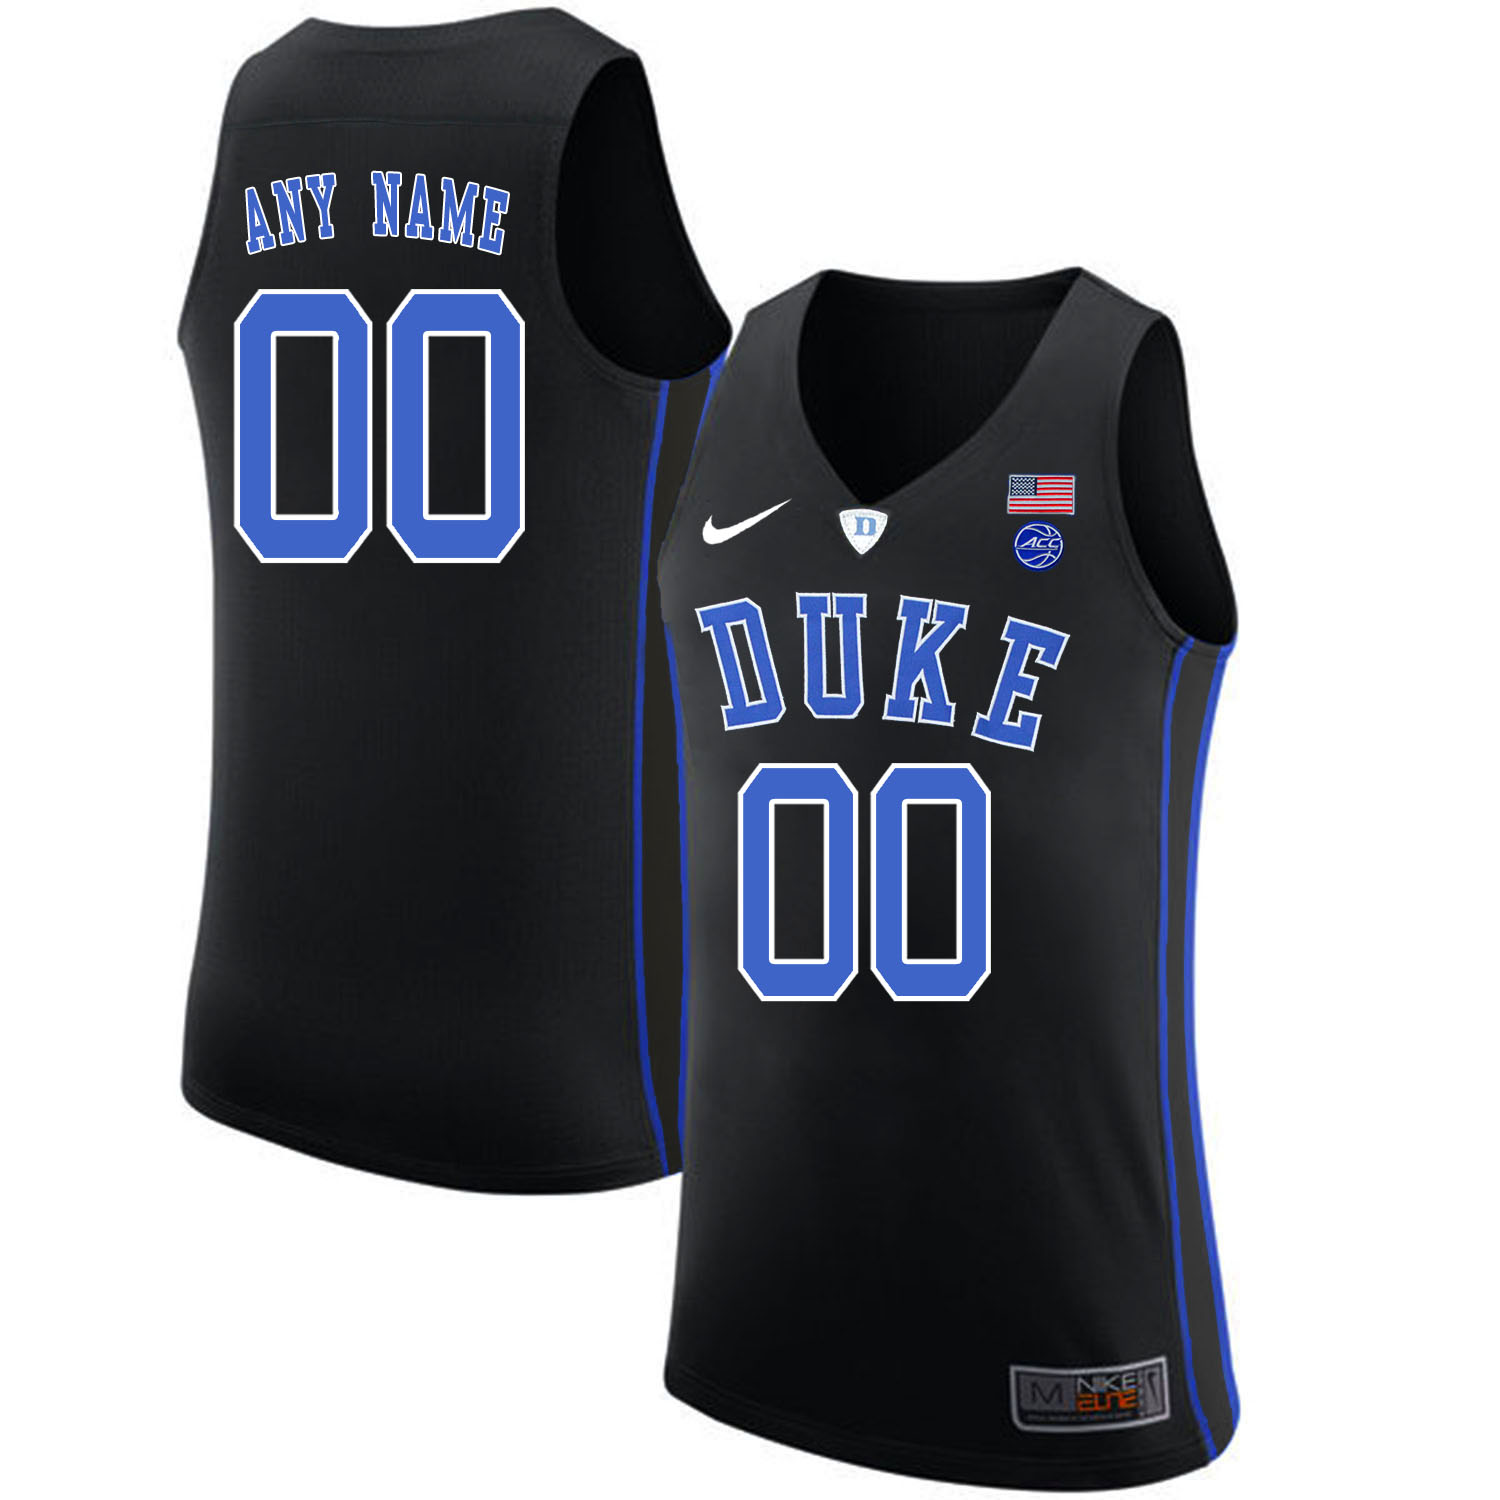 Duke Blue Devils Men's Customized Black Nike College Basketball Jersey